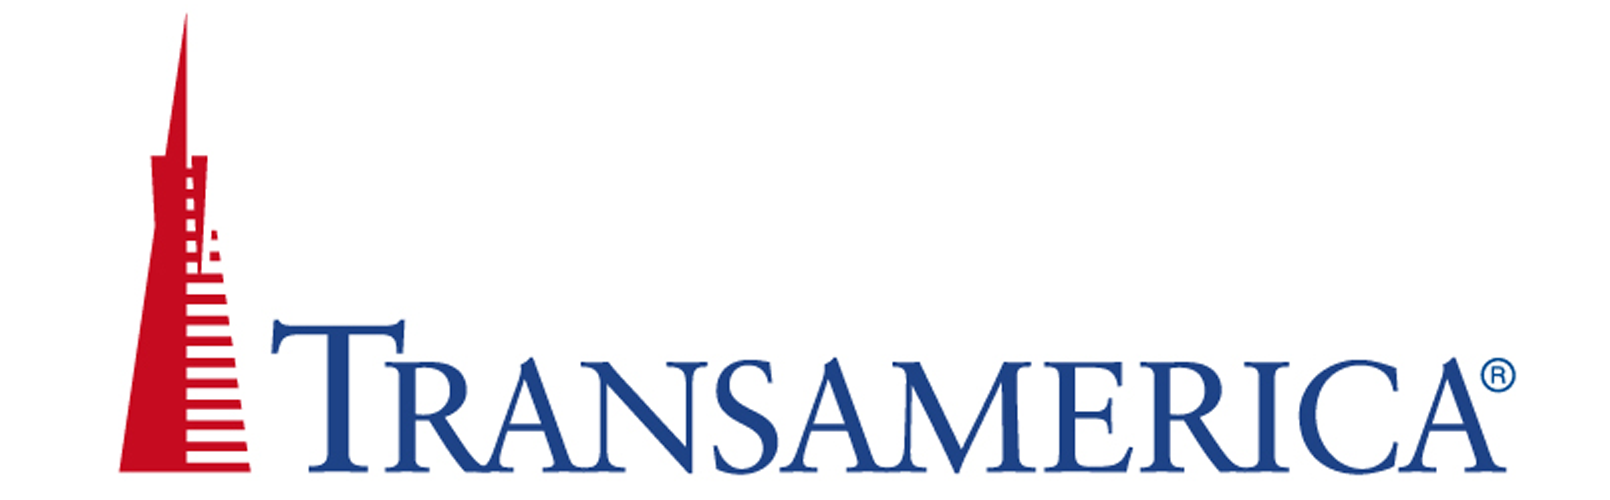 Insurance-Transamerica